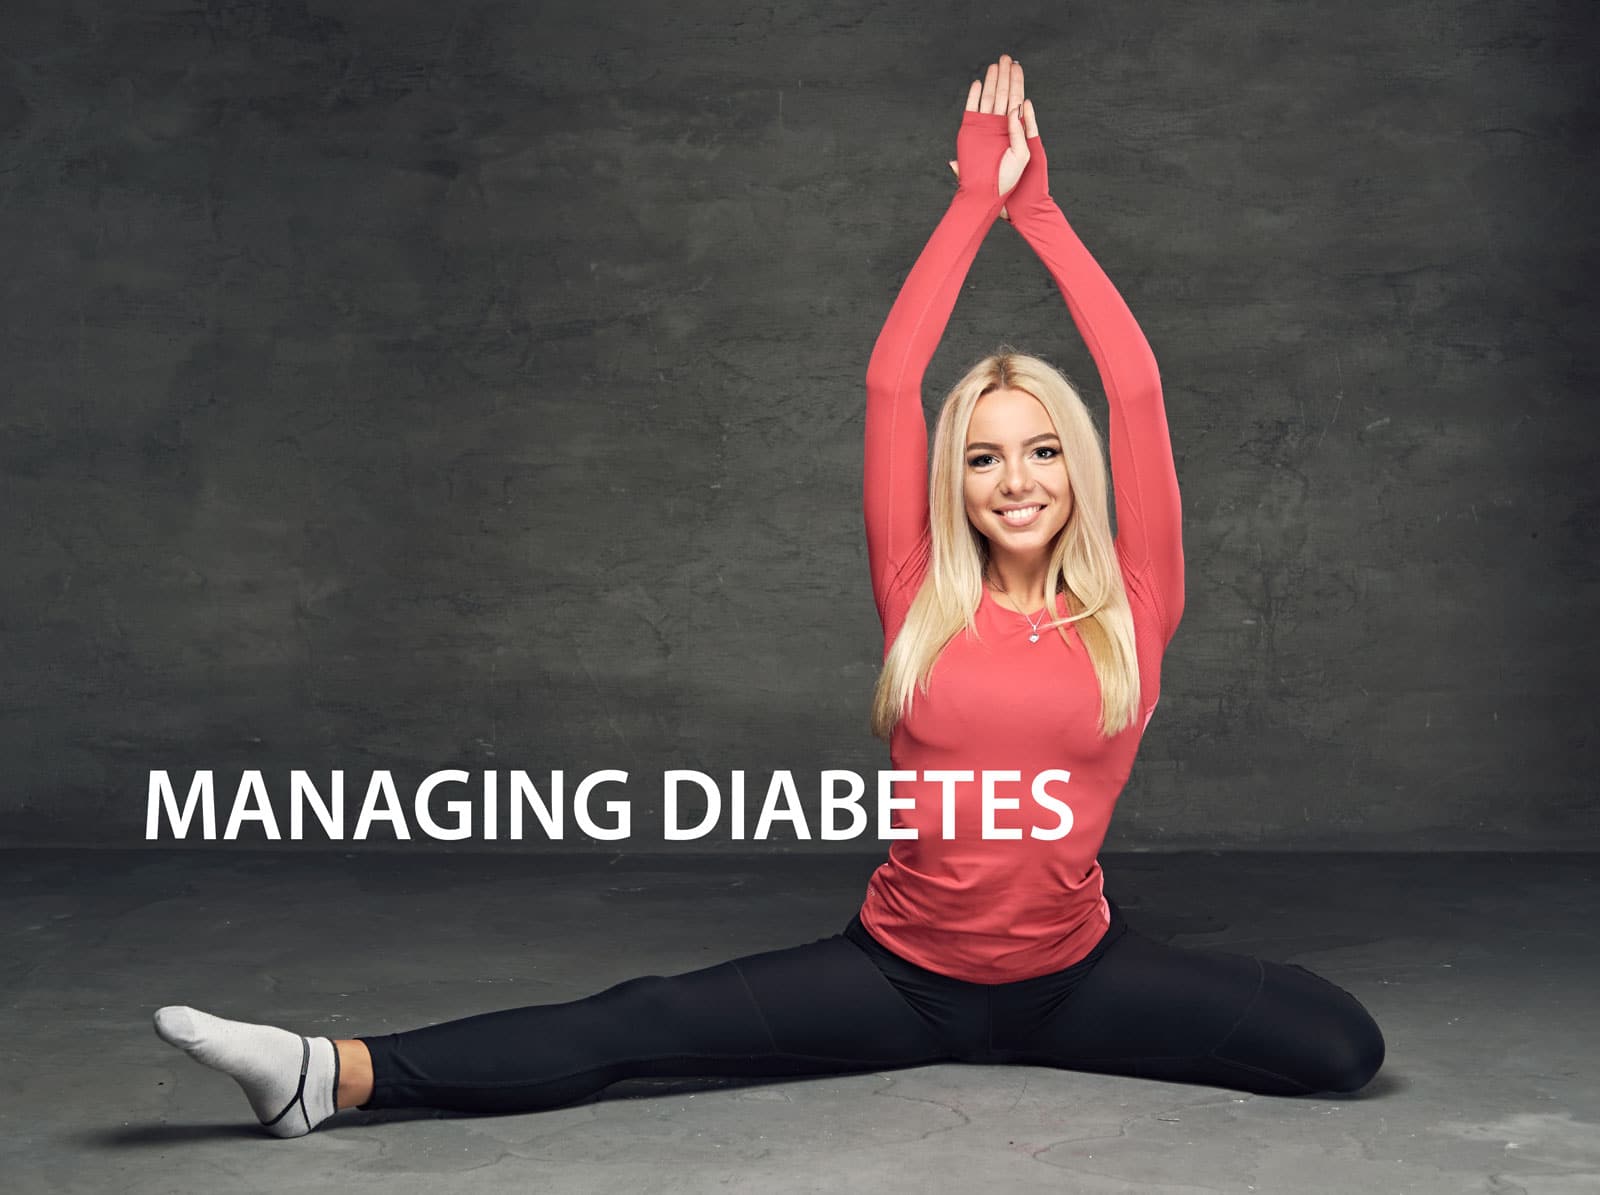 5 Tips for Managing Diabetes